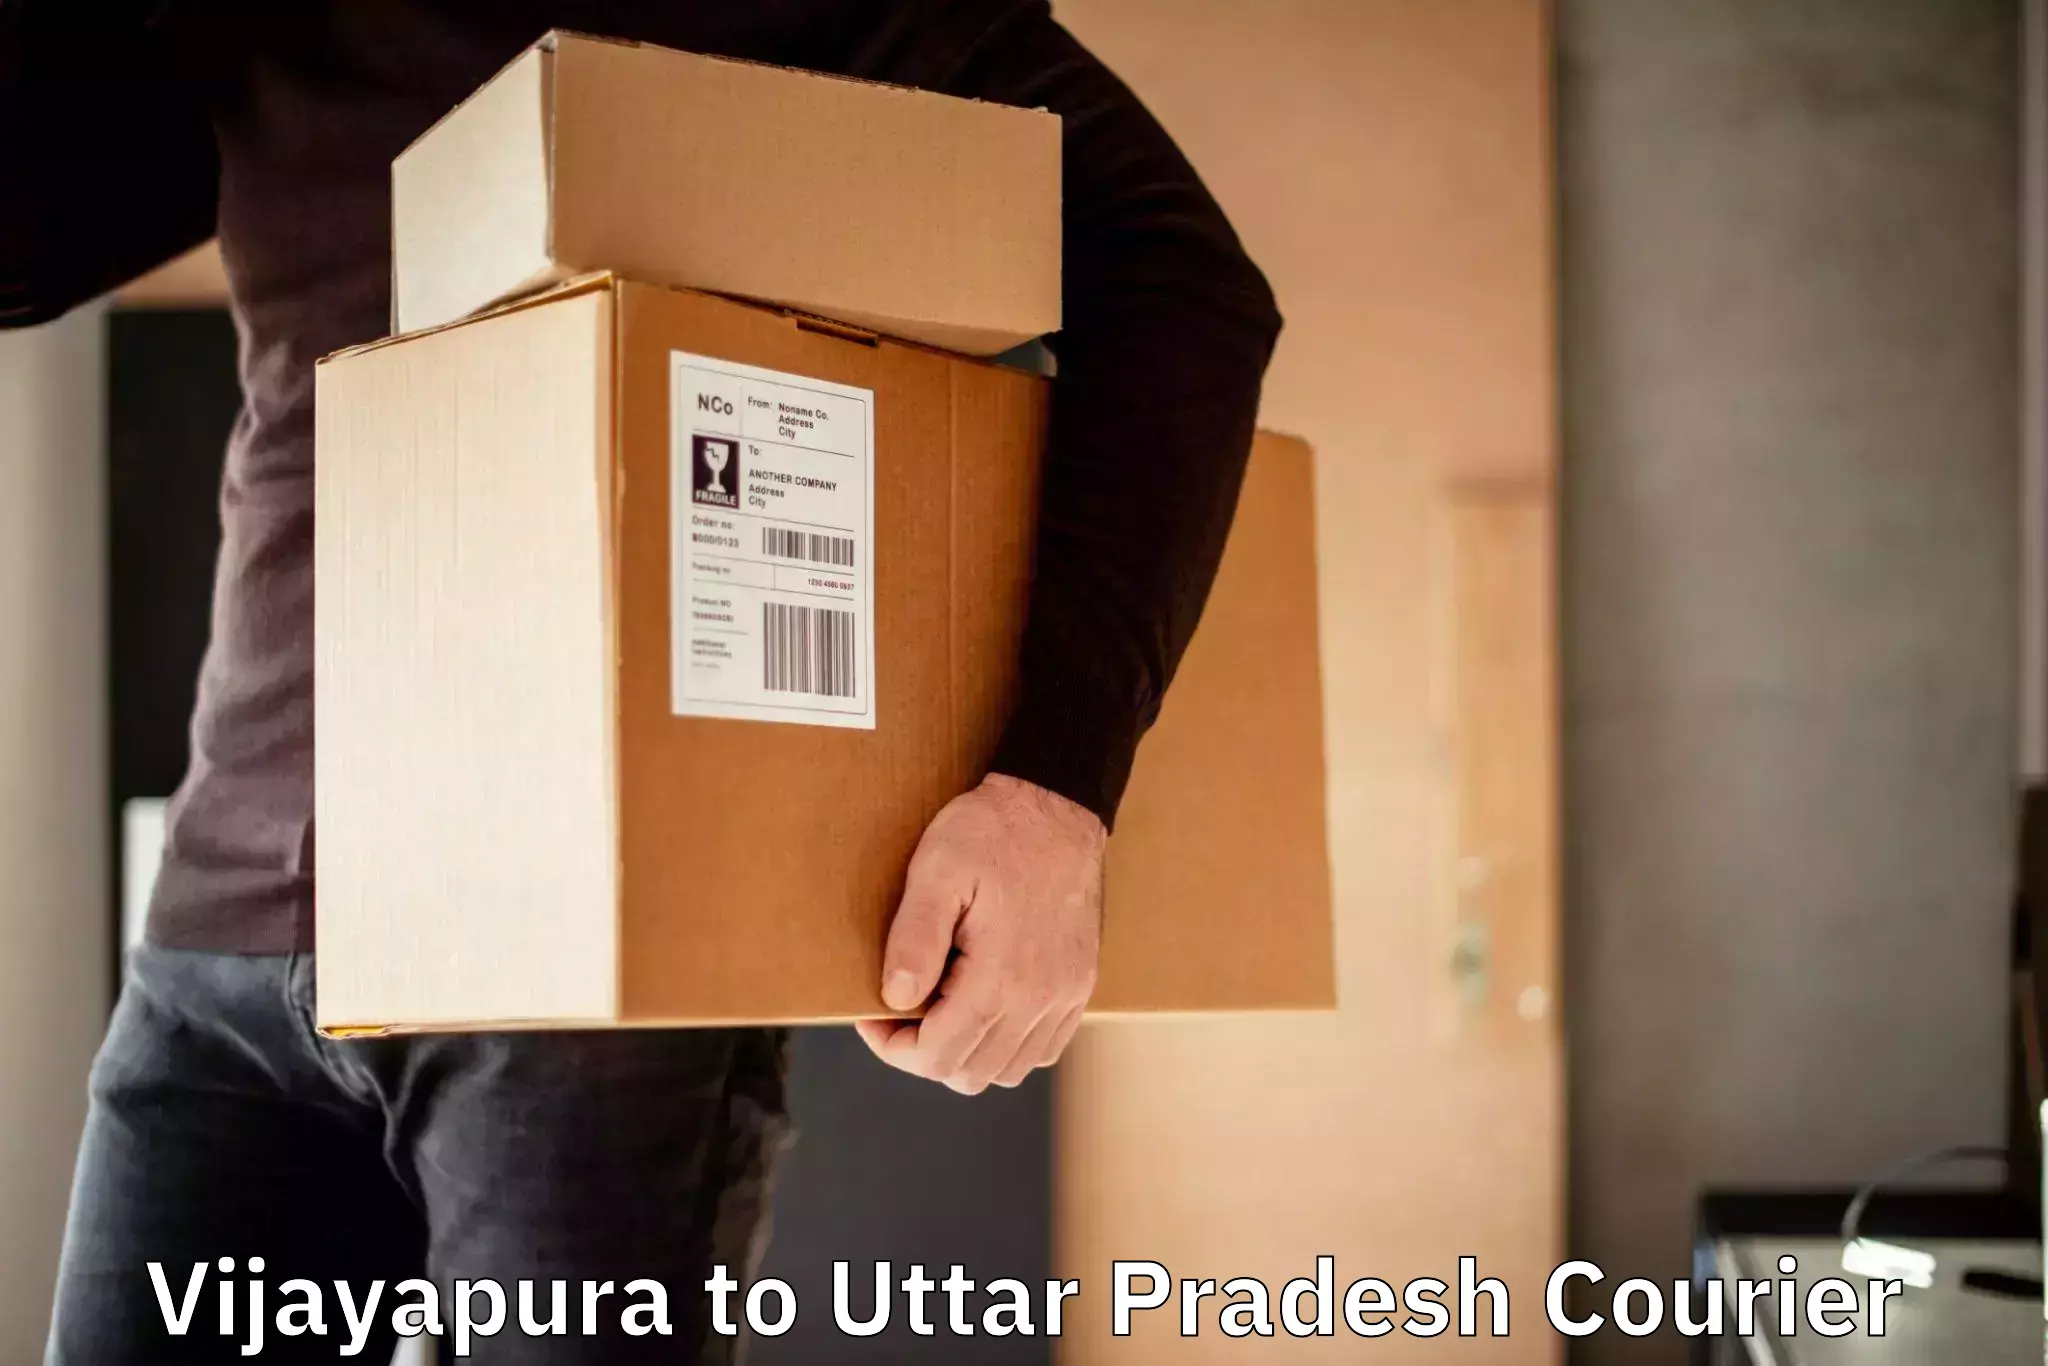 Flexible delivery schedules Vijayapura to Bareilly